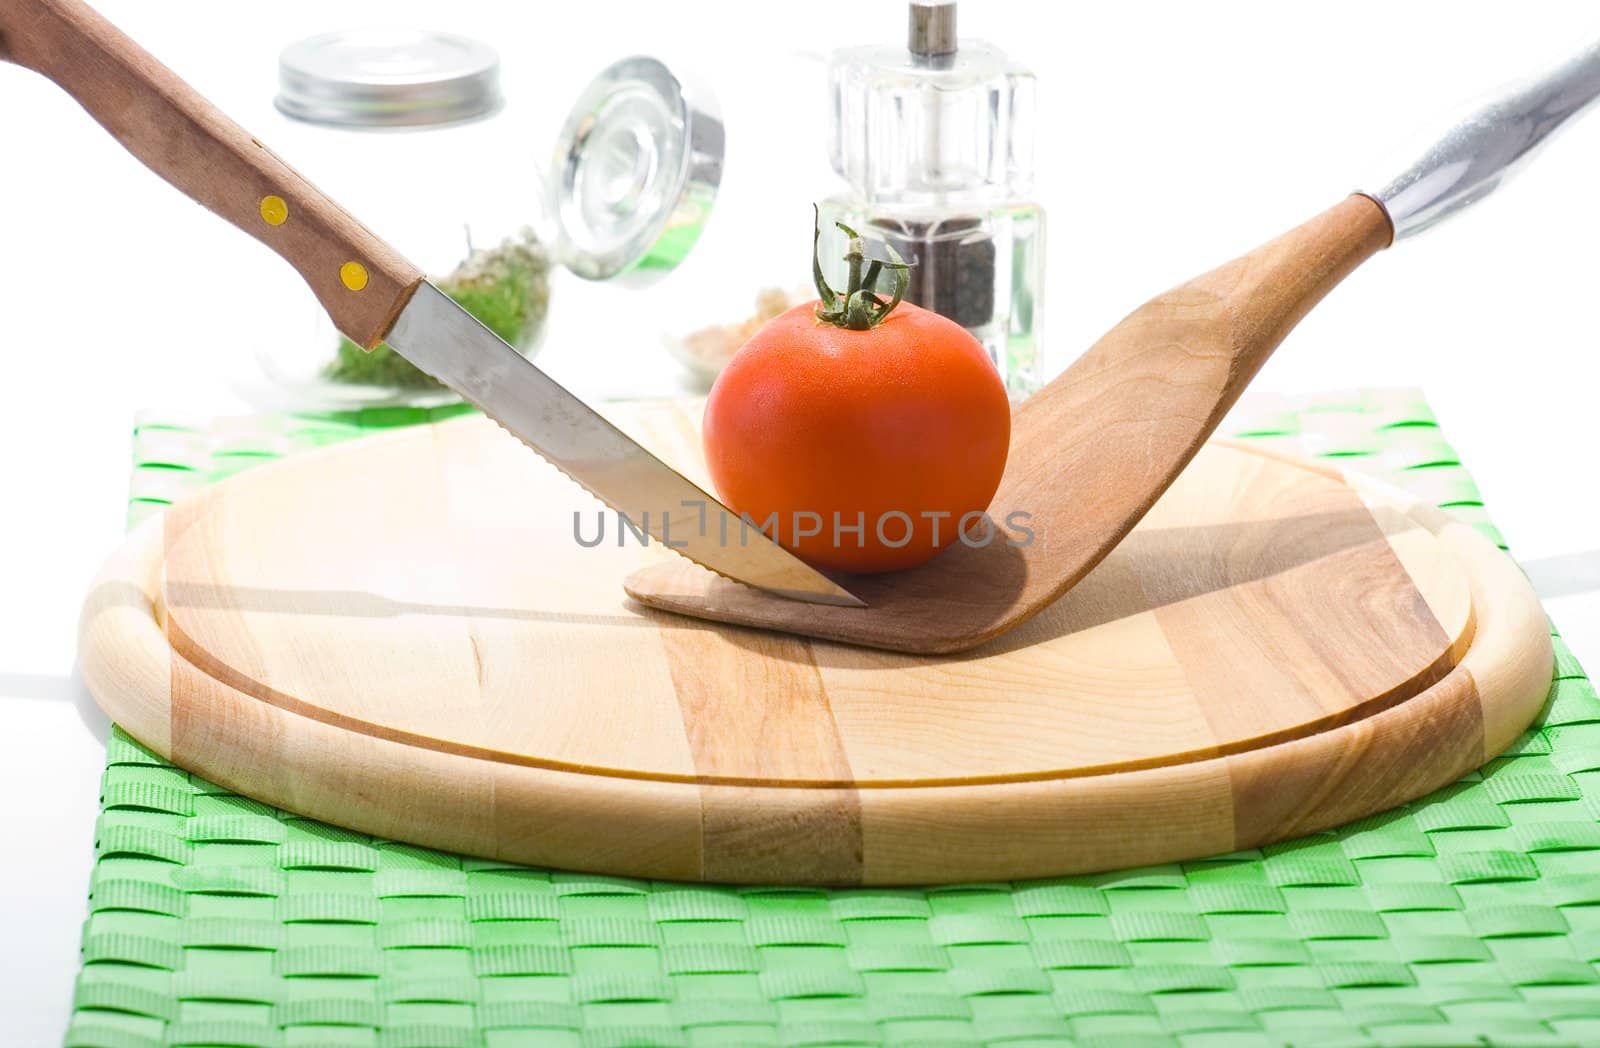 Tomato by Vladimir